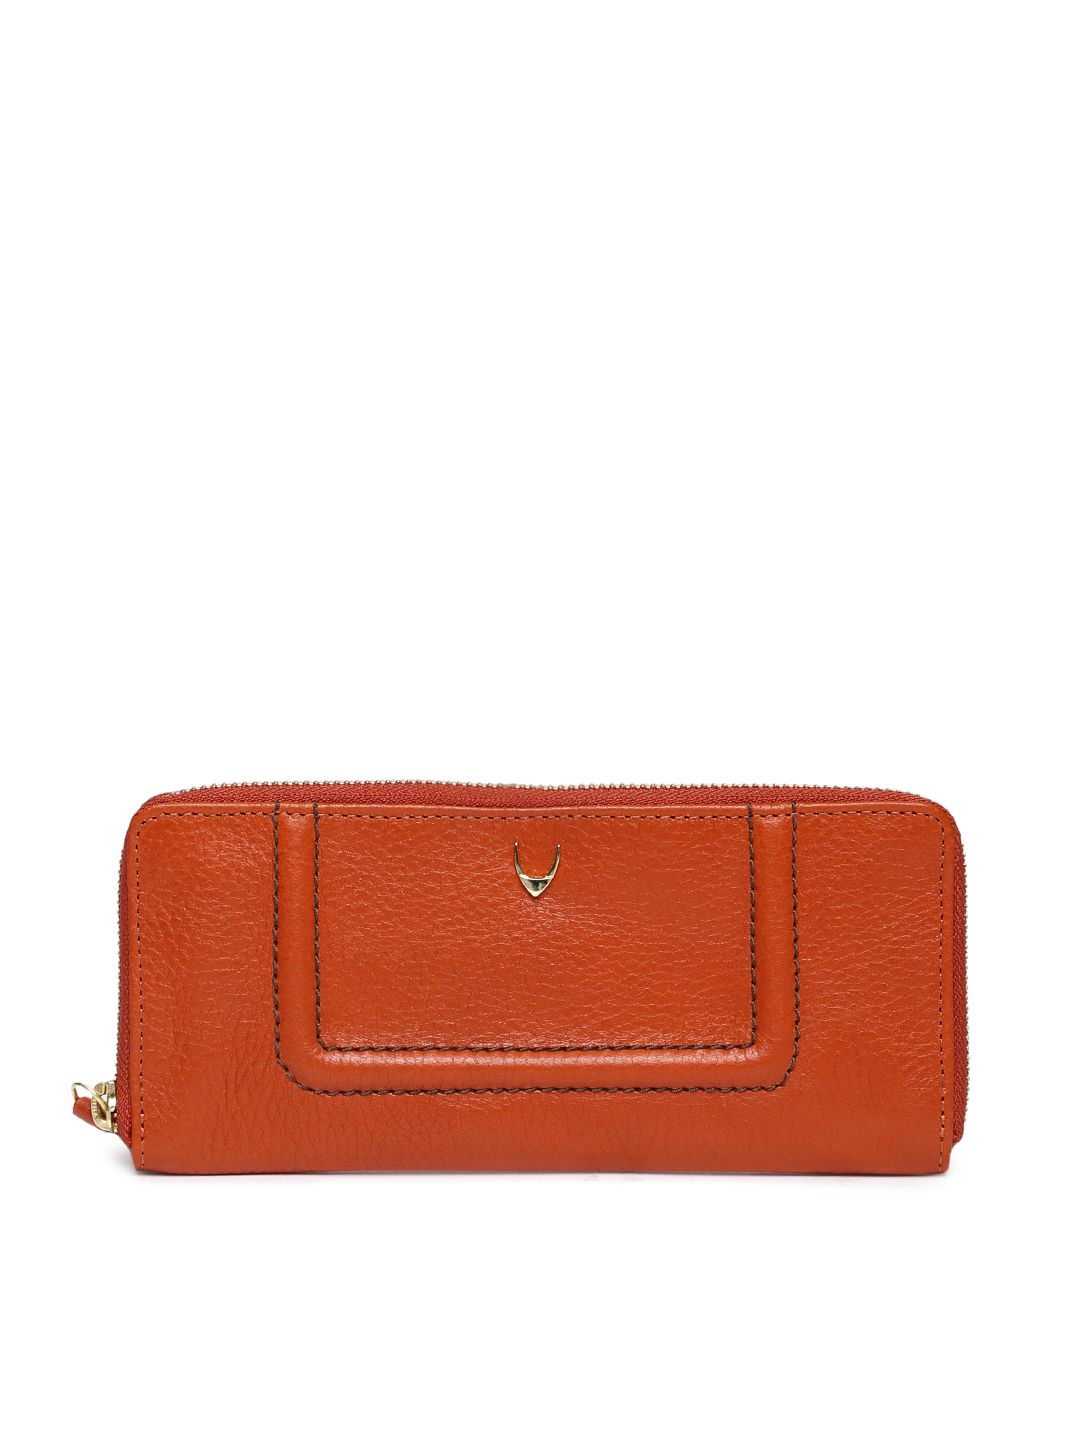 Hidesign Women Orange Leather Solid Zip Around Wallet Price in India